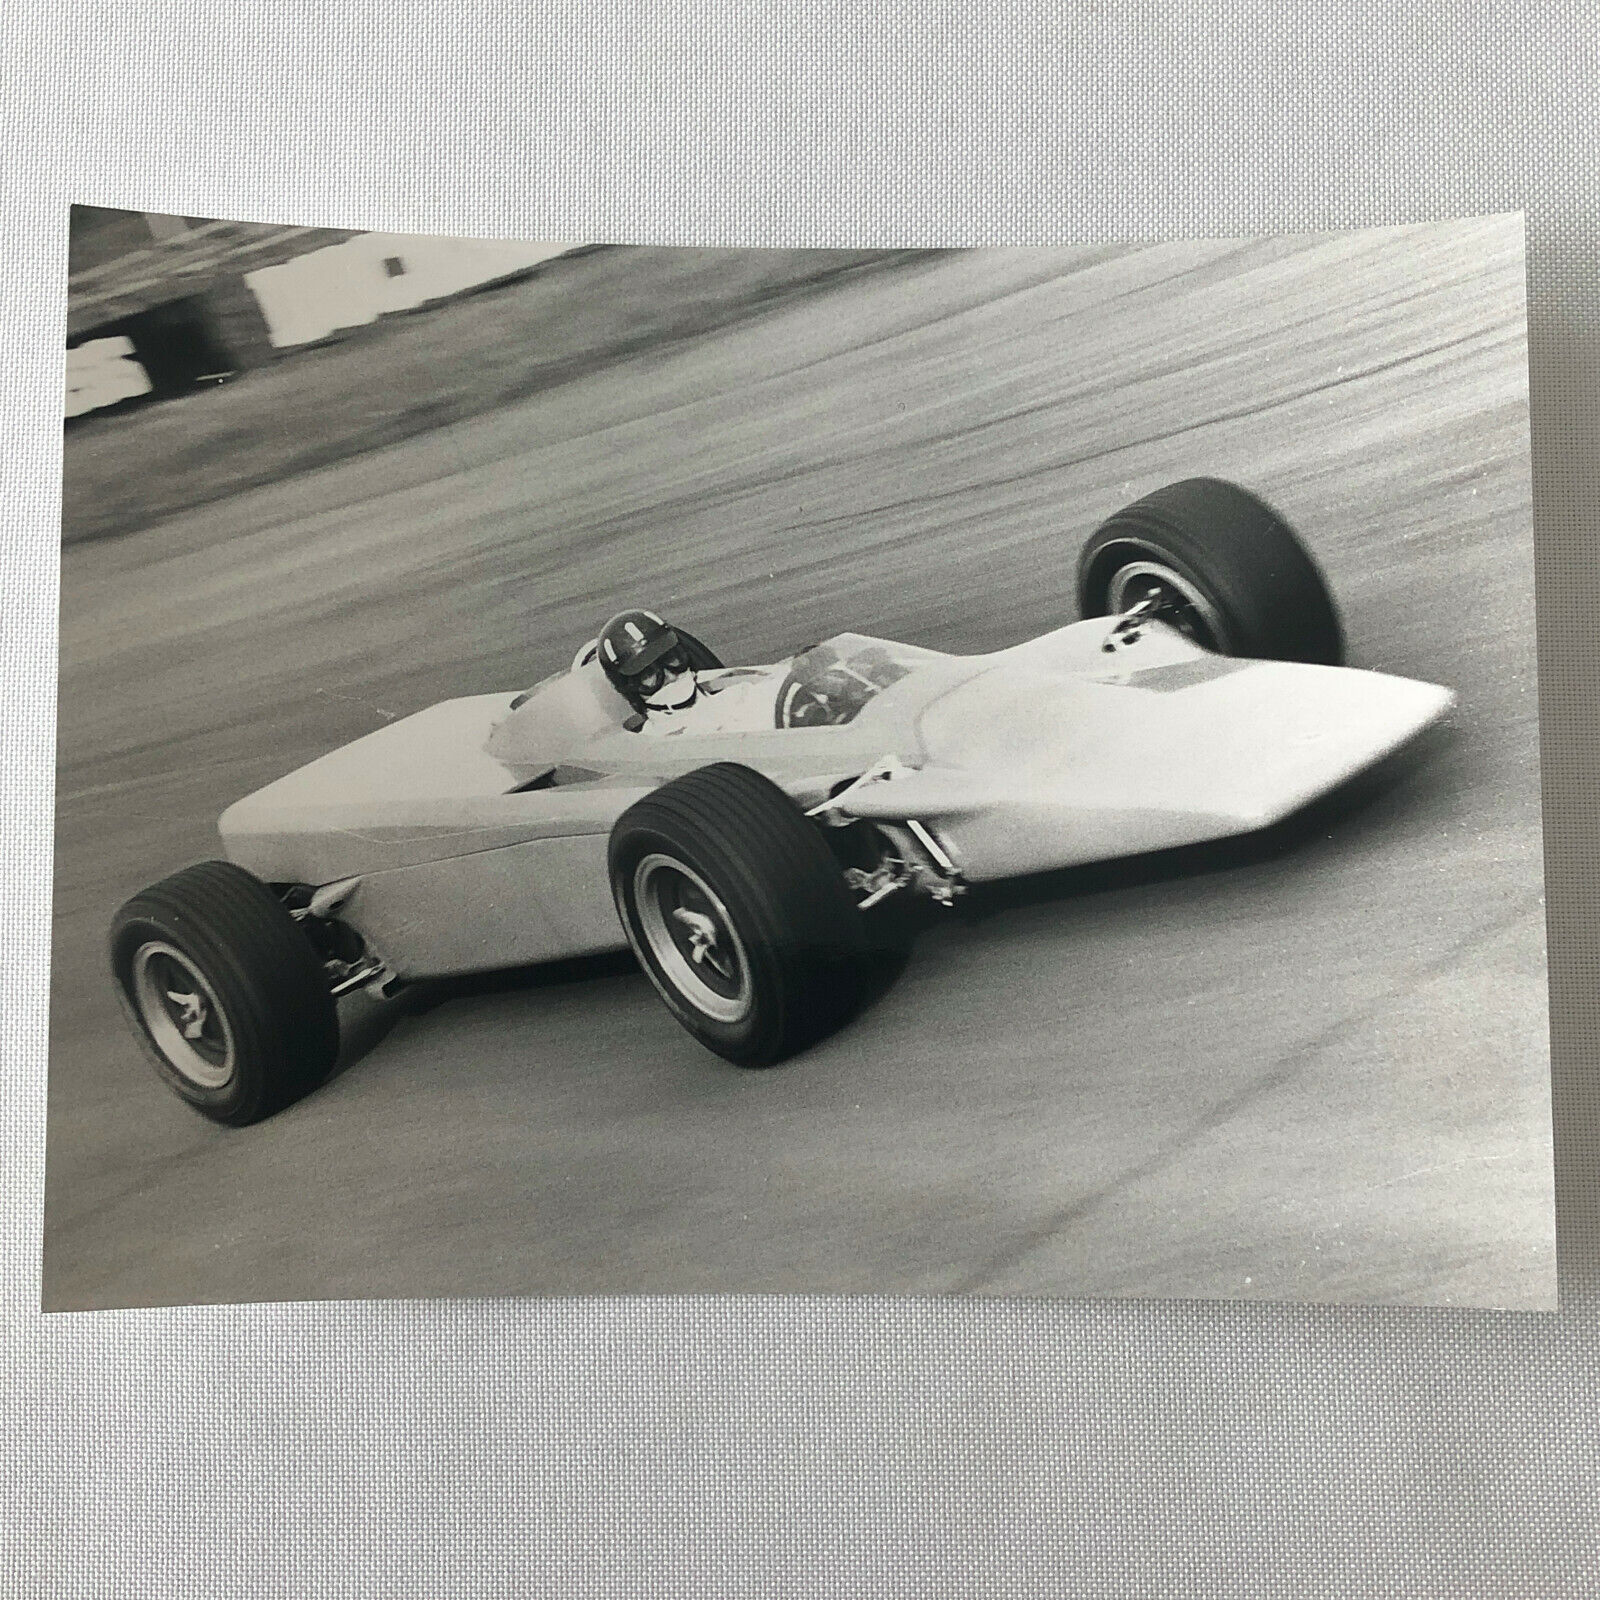 Vintage 1968 Graham Hill Lotus STP Racing Car Press Photo Photograph 